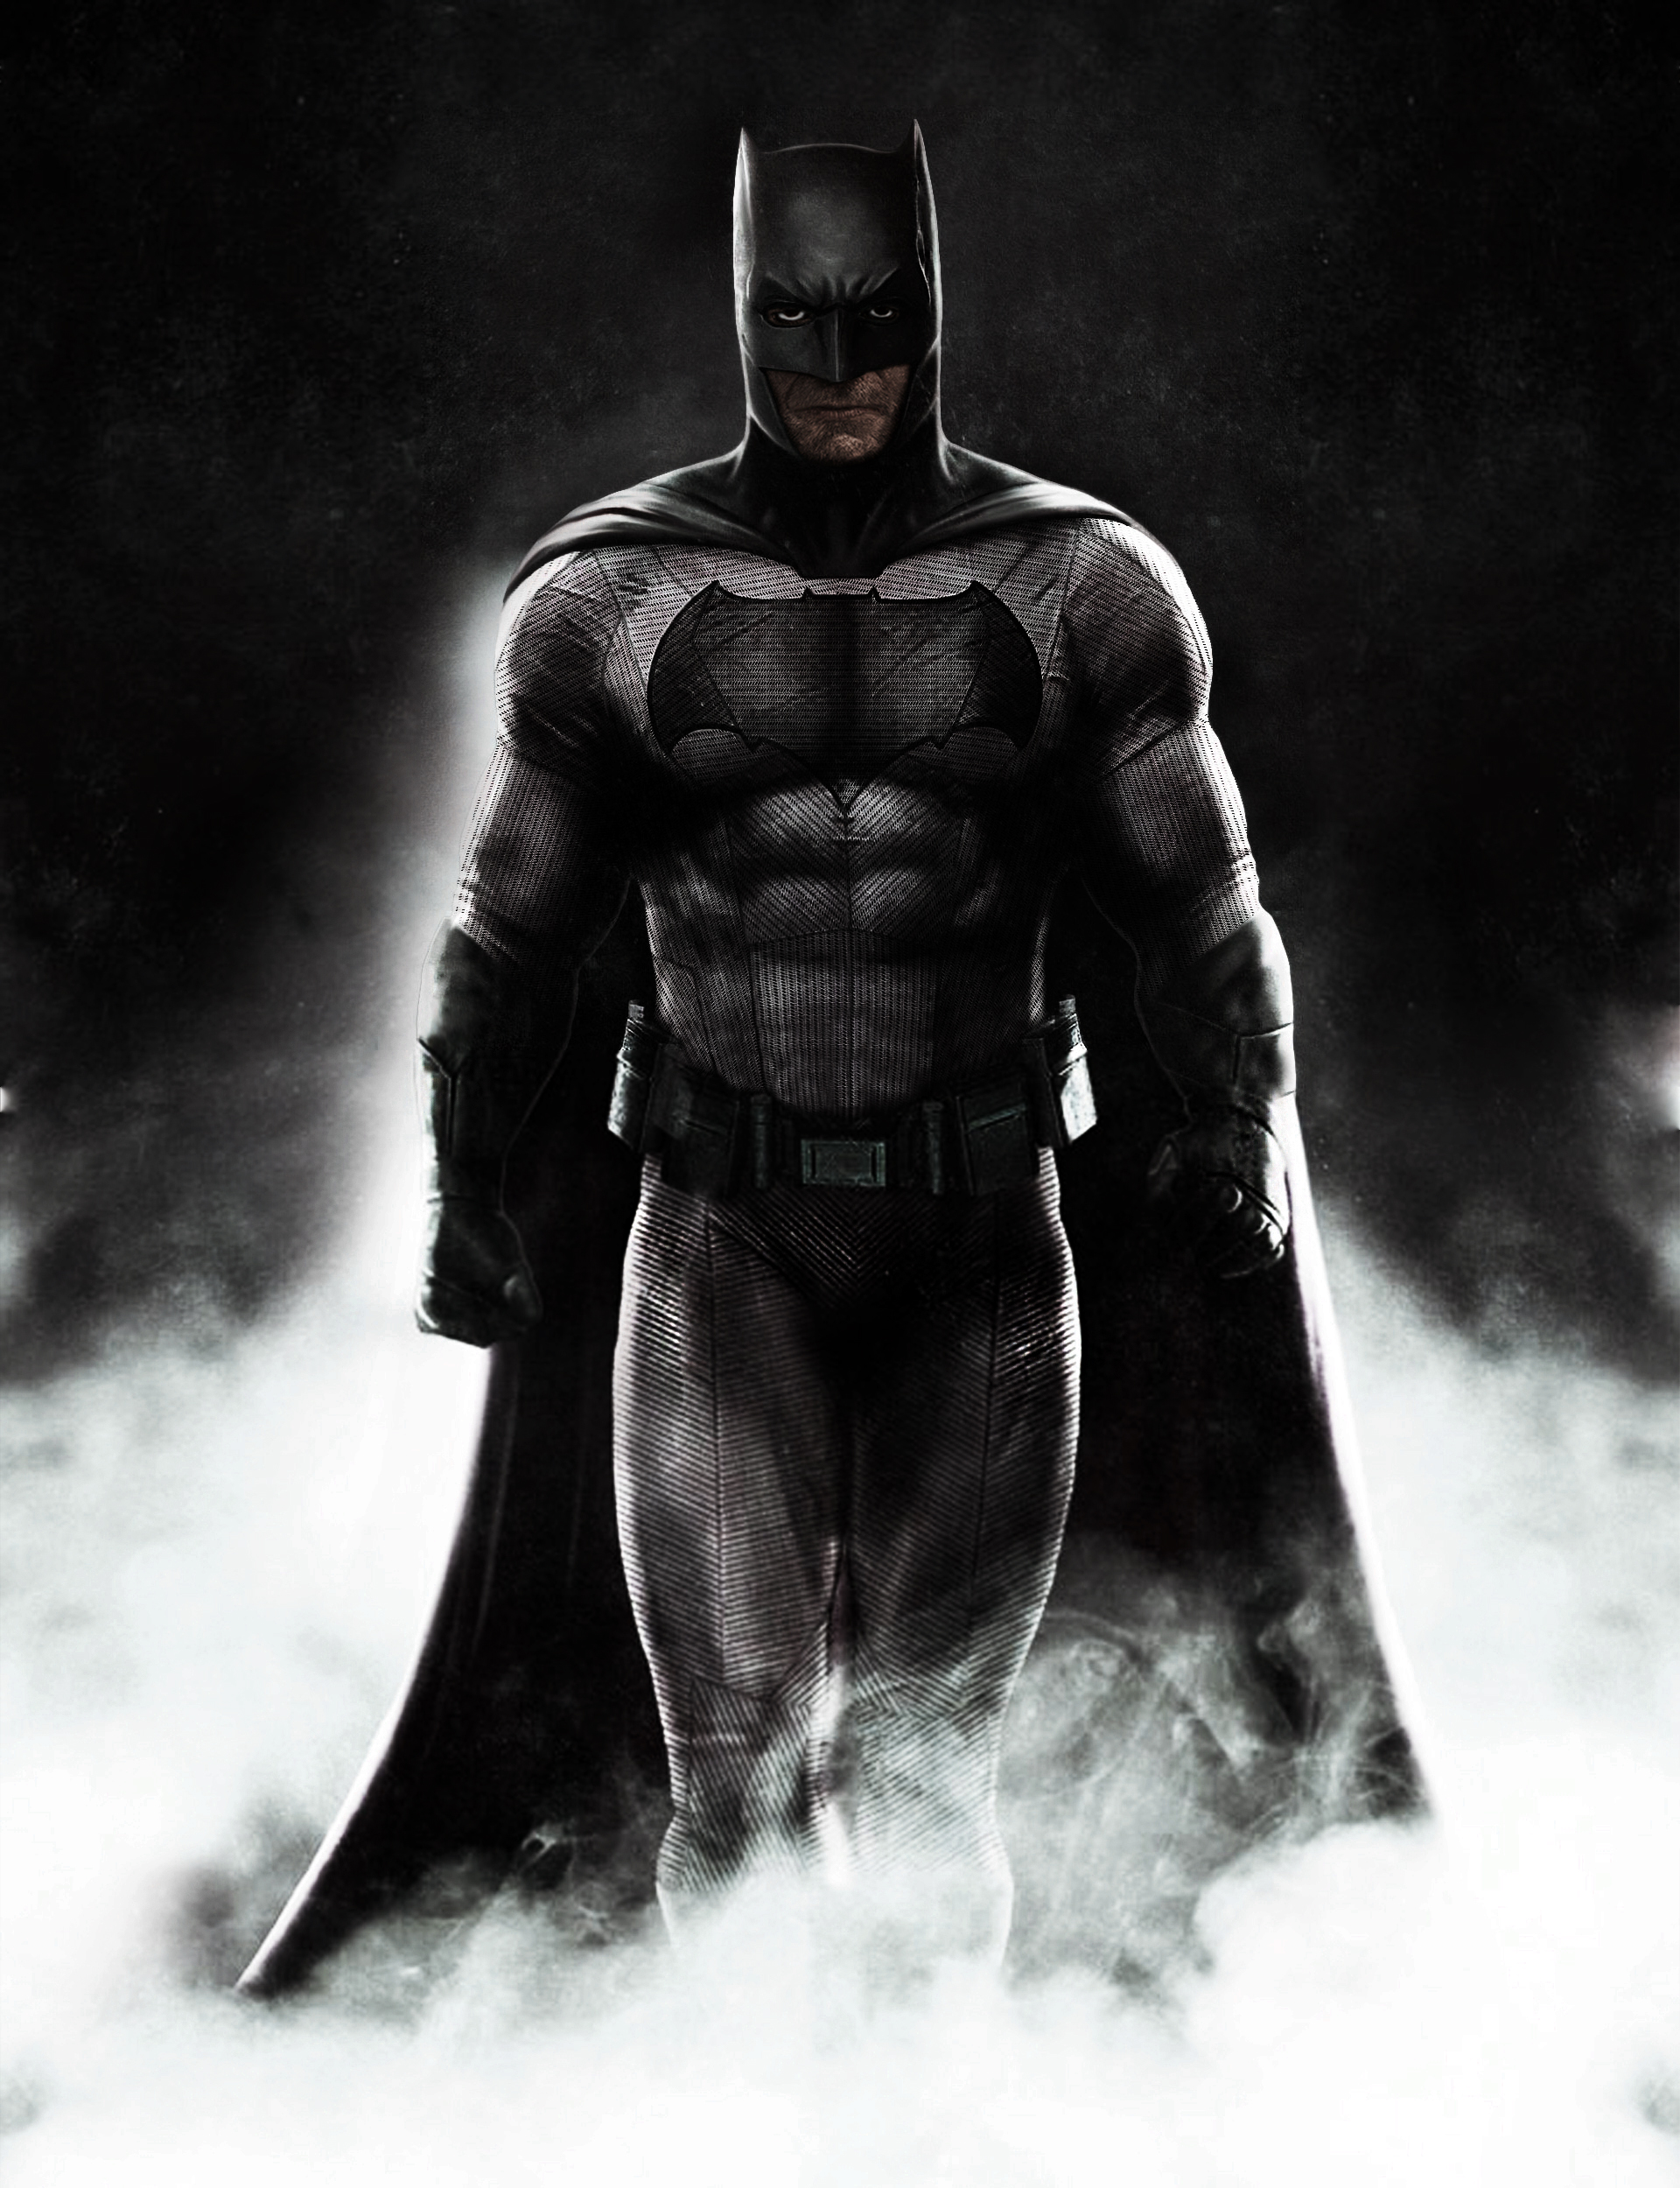 Hugh Jackman as Batman by Daviddv1202 on DeviantArt